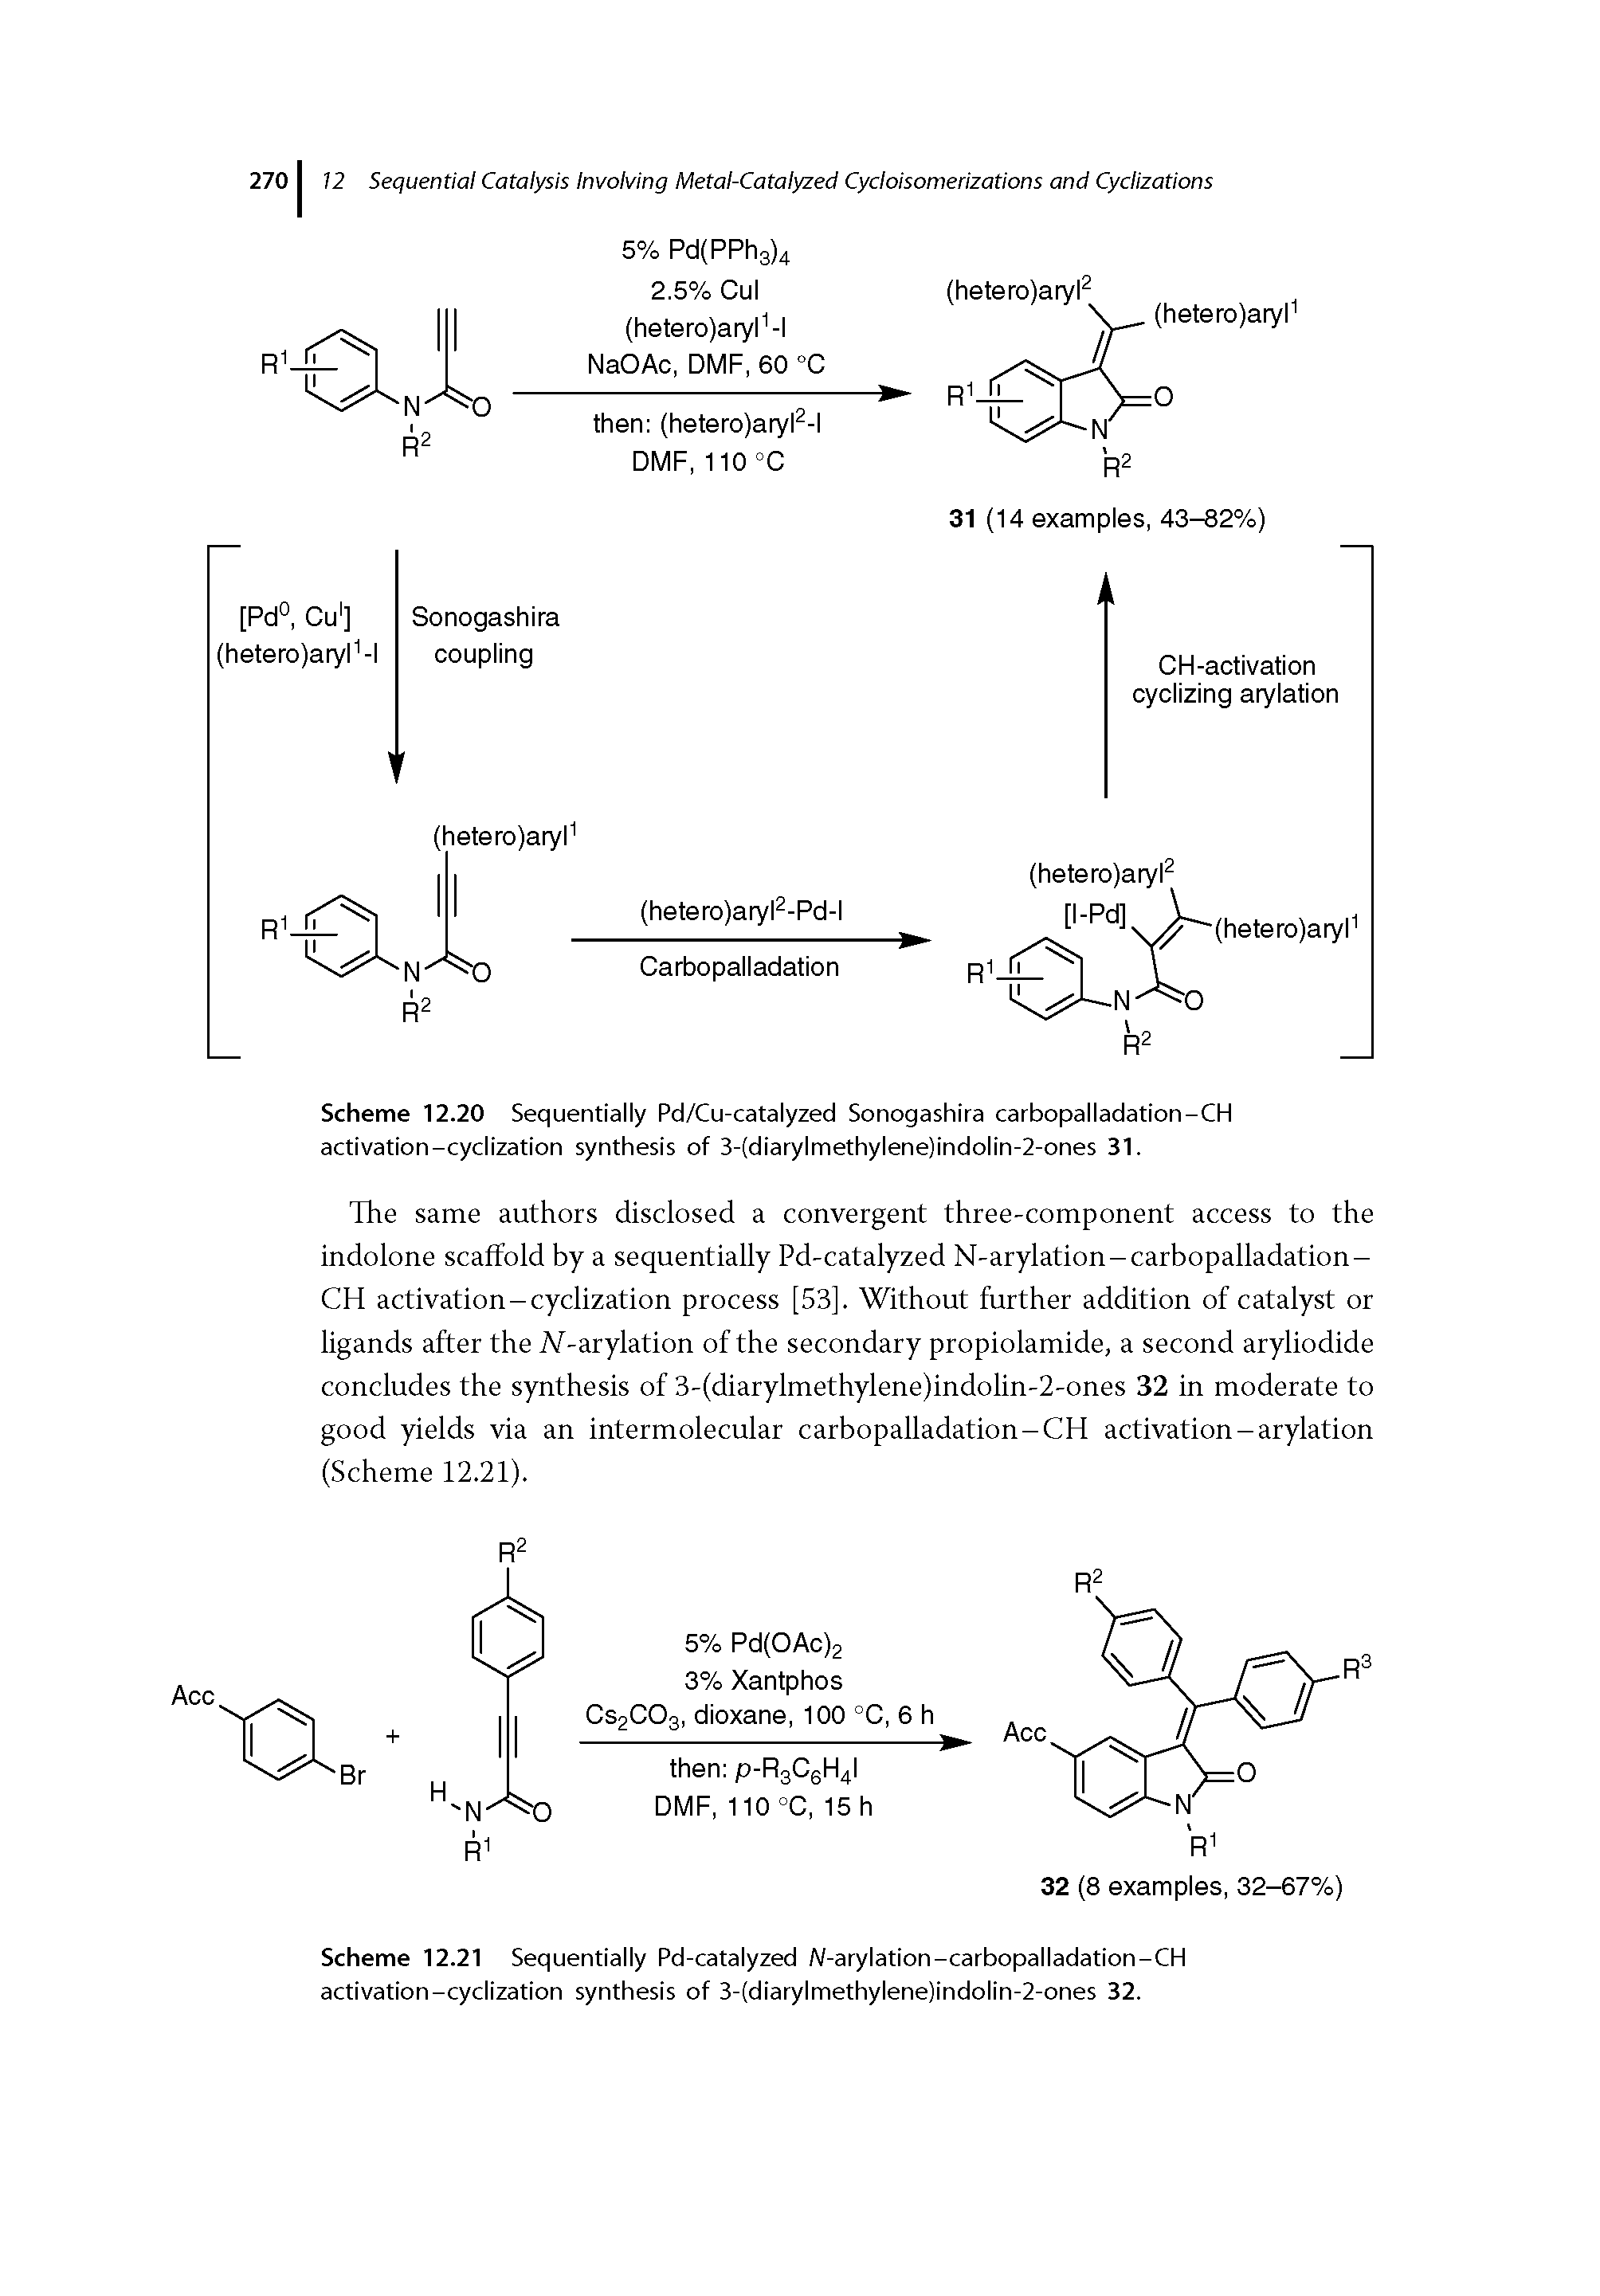 Scheme 12.20 Sequentially Pd/Cu-catalyzed Sonogashira carbopalladation-CH activation-cyclization synthesis of 3-(diarylmethylene)indolin-2-ones 31.